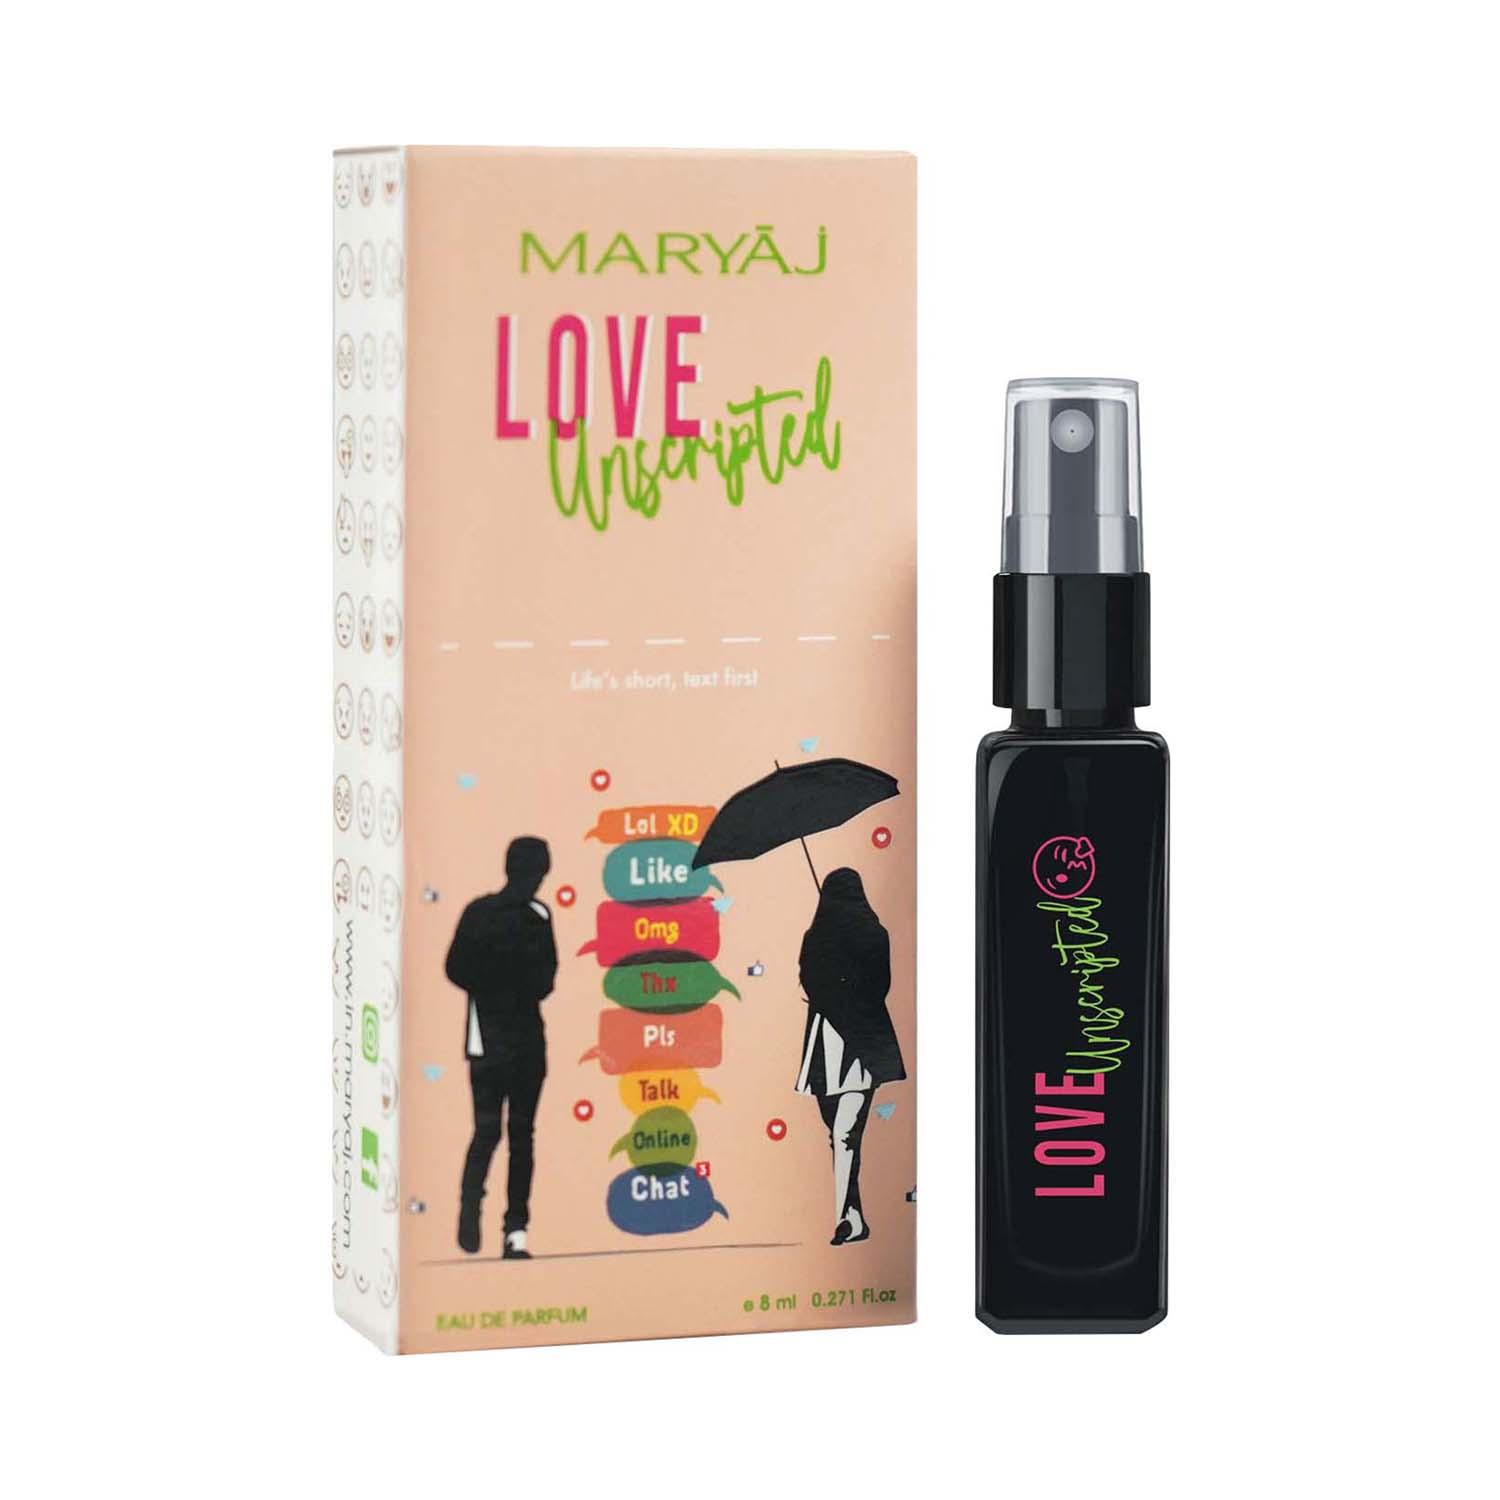 Maryaj | Maryaj Love Unscripted Gift for Him & Her Eau De Parfum for Unisex (8 ml)